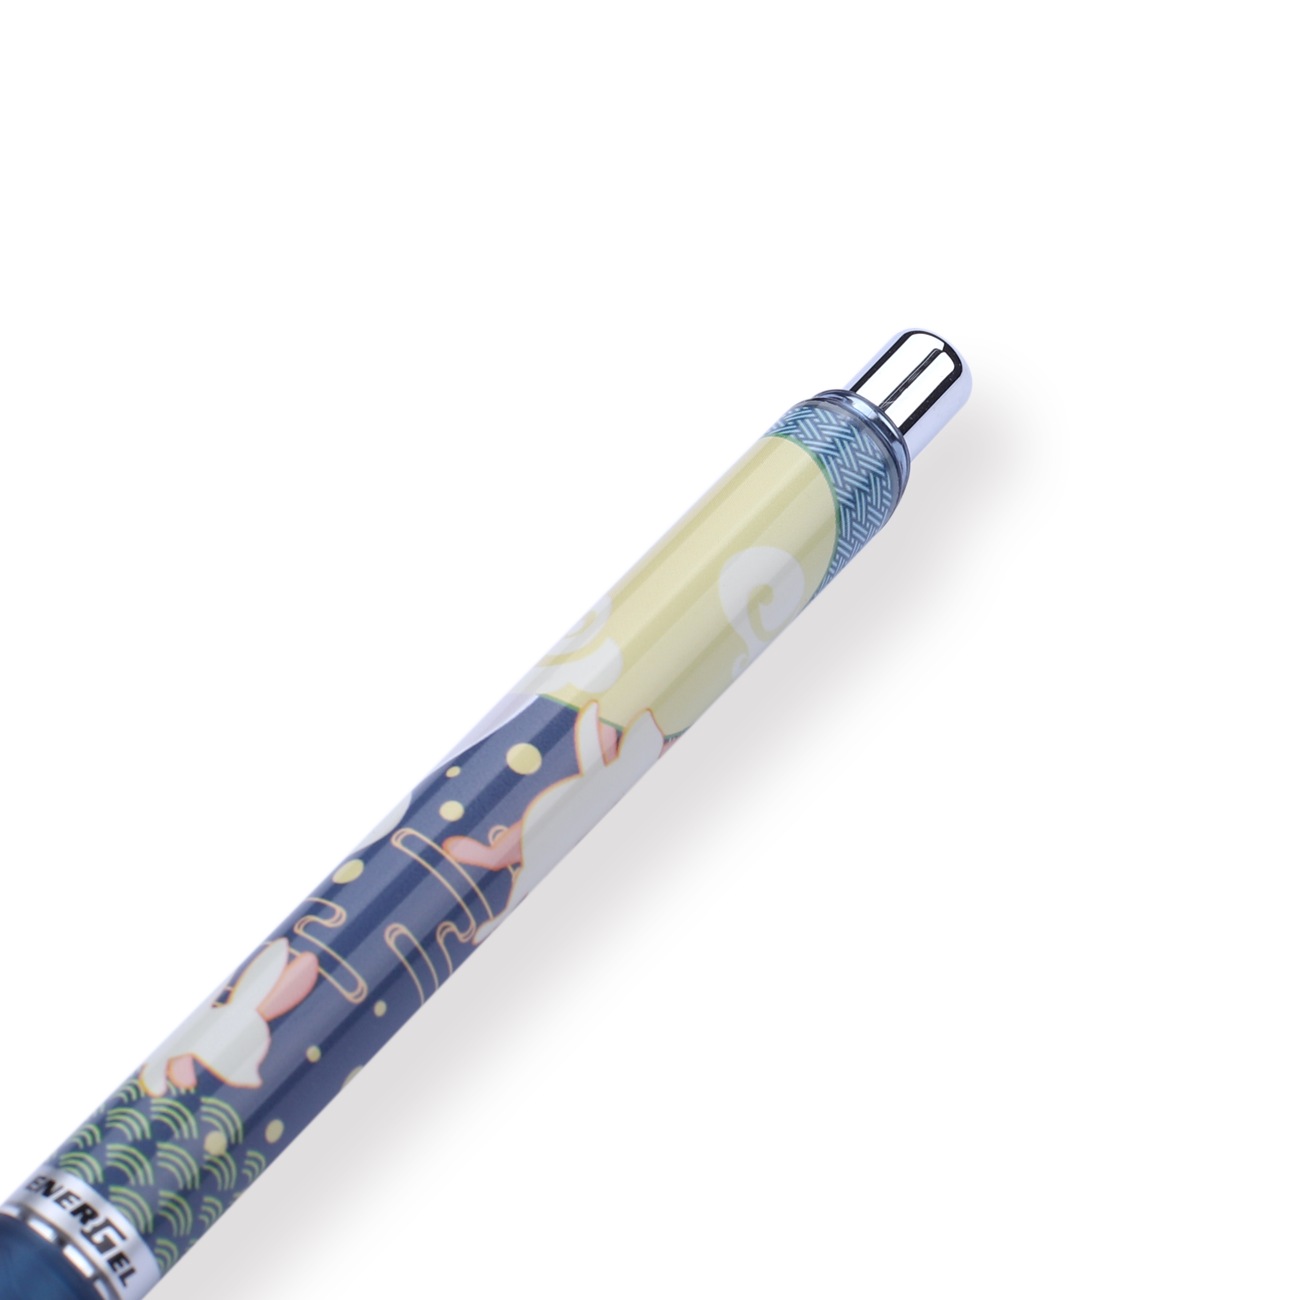 Pentel EnerGel Fall-themed Limited Edition Gel Pen - 0.5 mm - Blue Grip - Stationery Pal